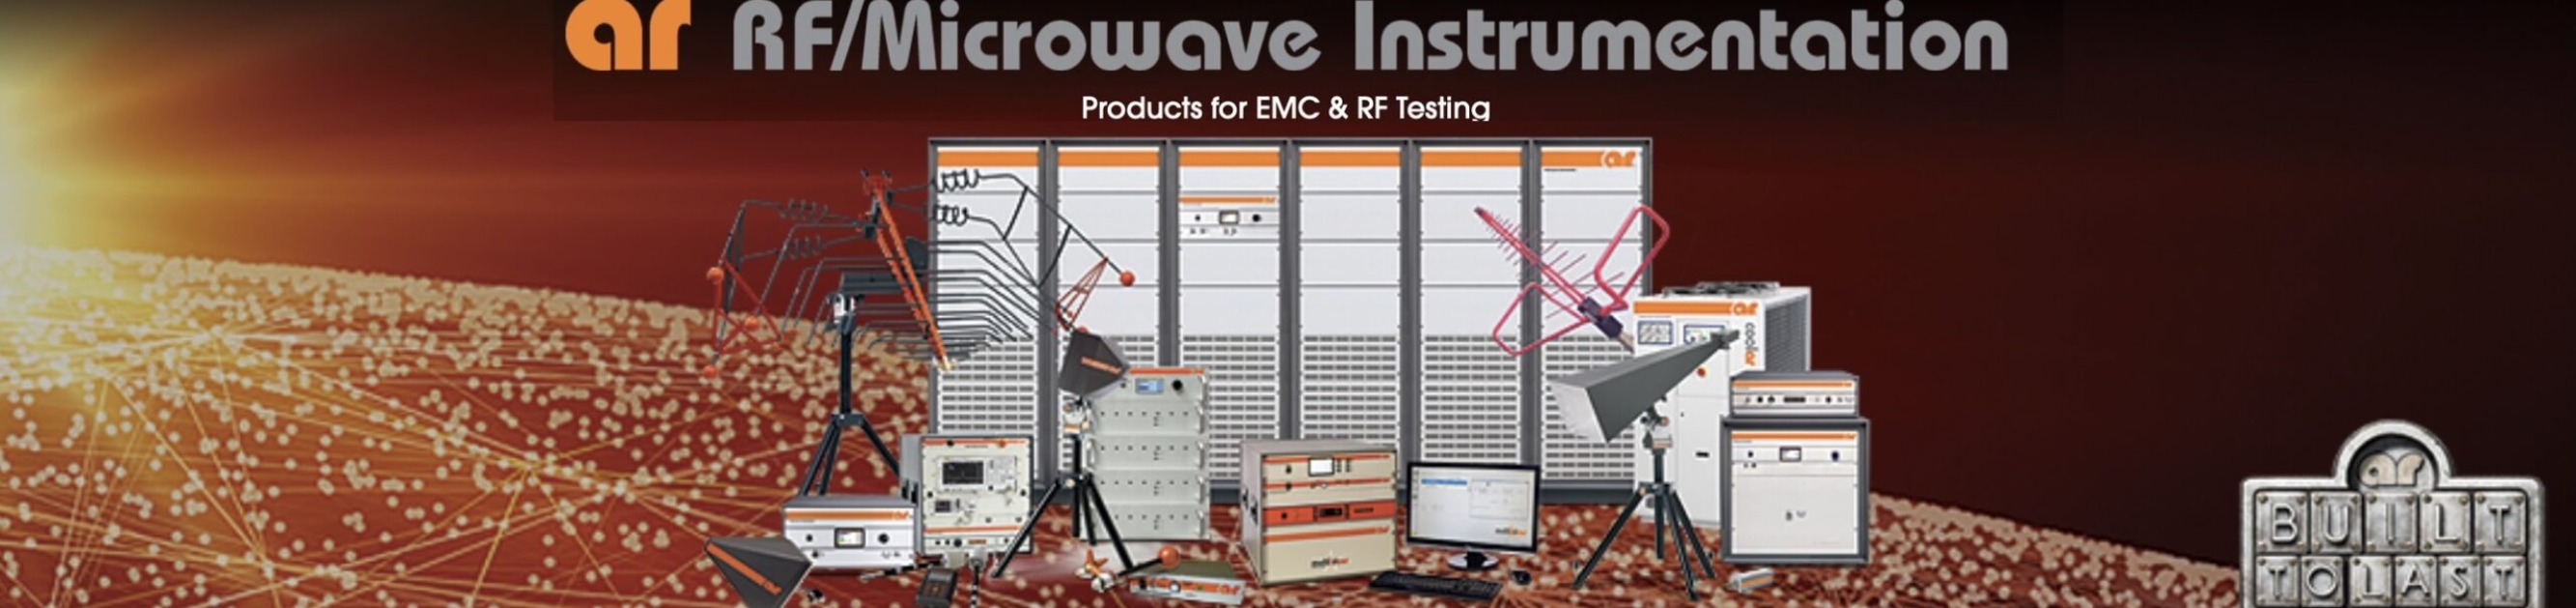 AR RF/Microwave Instrumentation Products for EMC & RF Testing